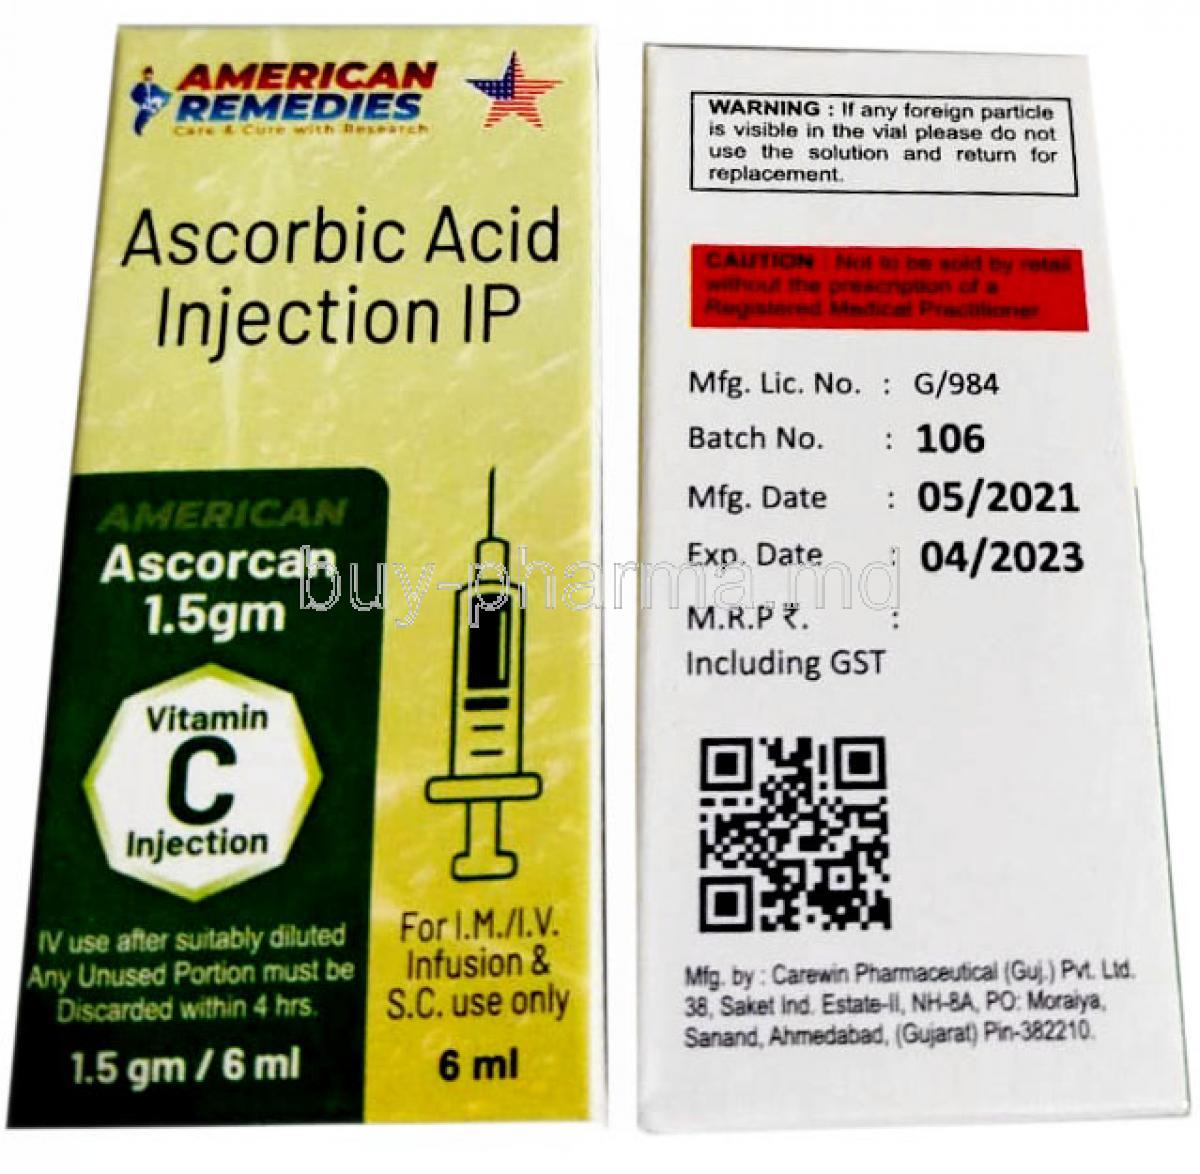 Ascorcan, Ascorbic Acid 1.5gm  Injection, American Remedies, Box information